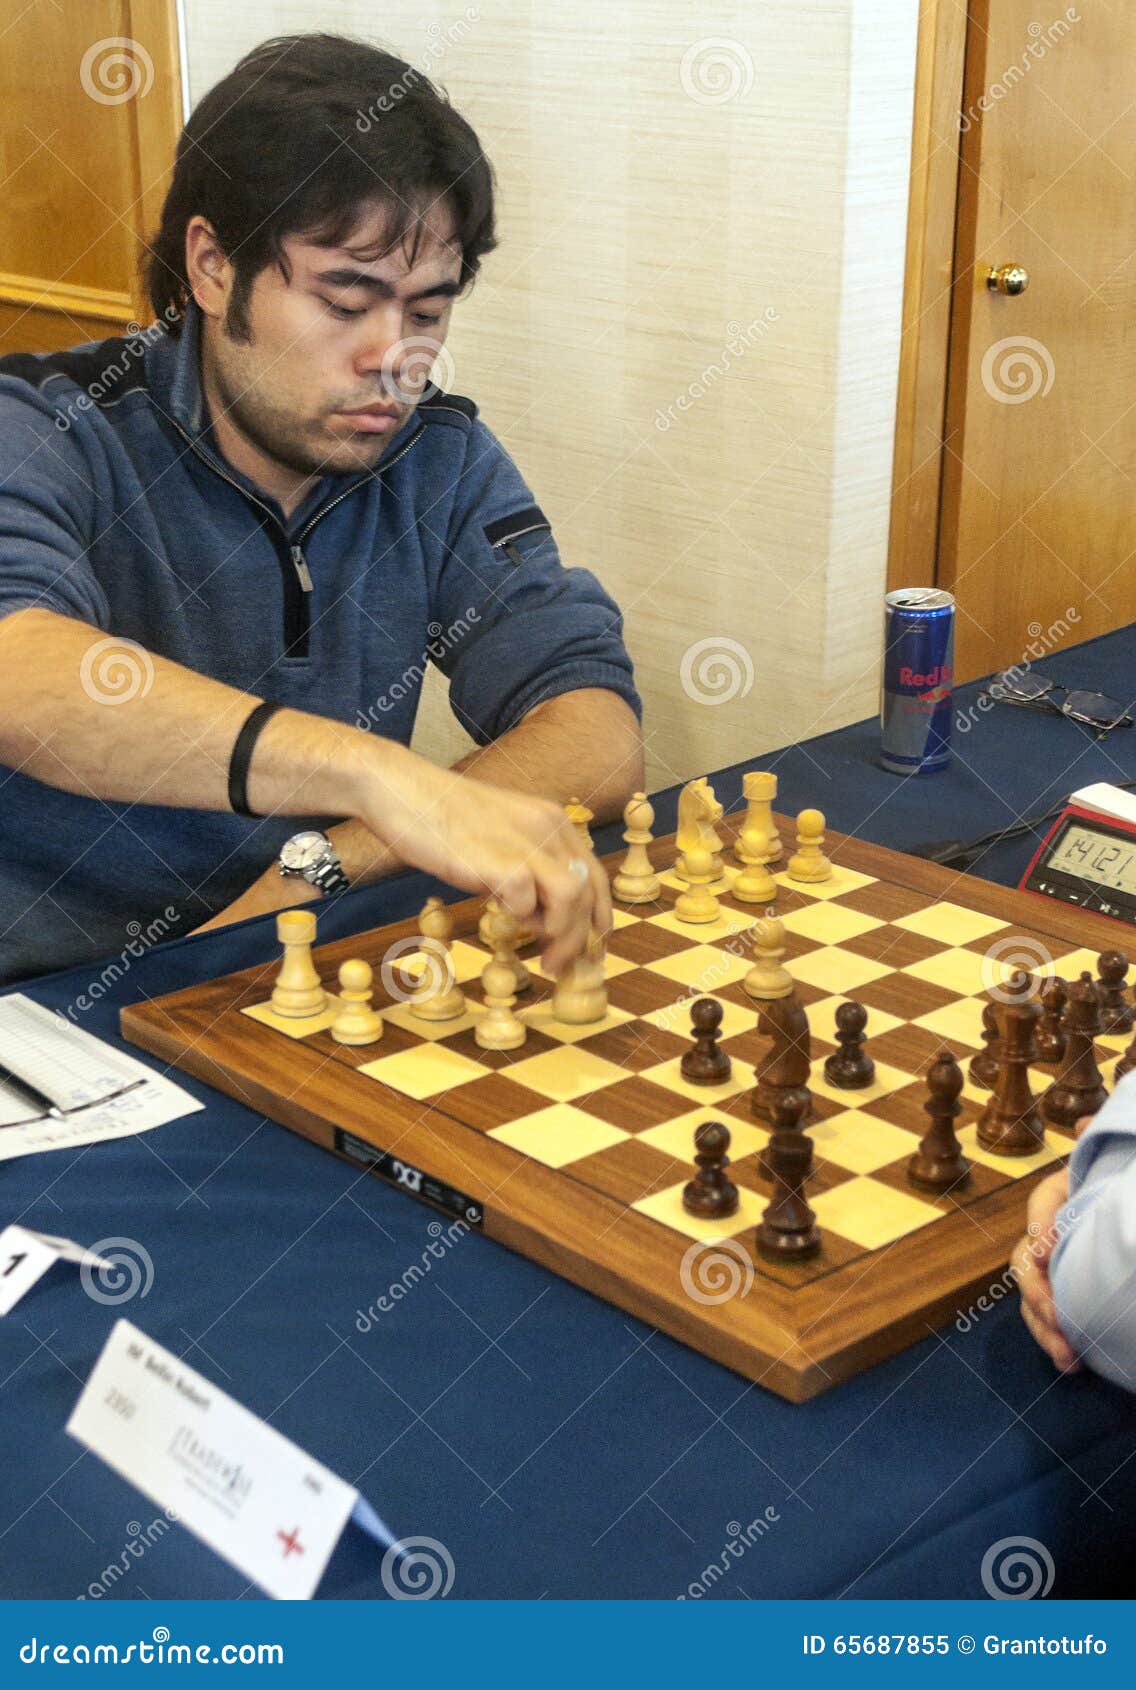 Why i don't play chessle : r/HikaruNakamura